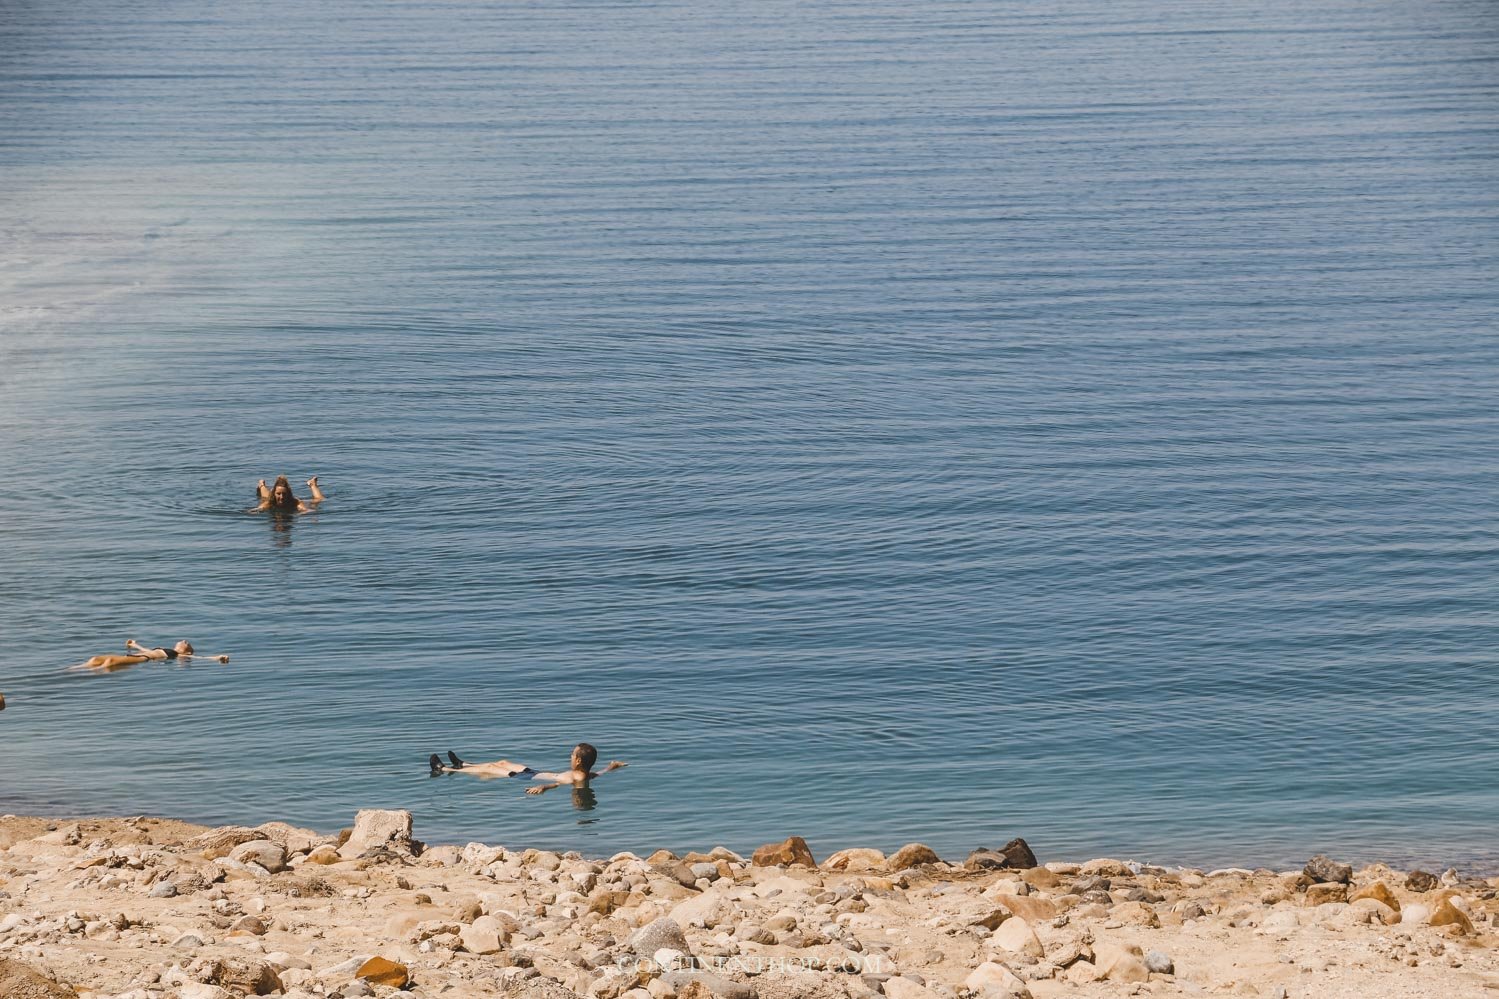 Swimming in the Dead Sea Jordan + Dead Sea tips! — Continent Hop